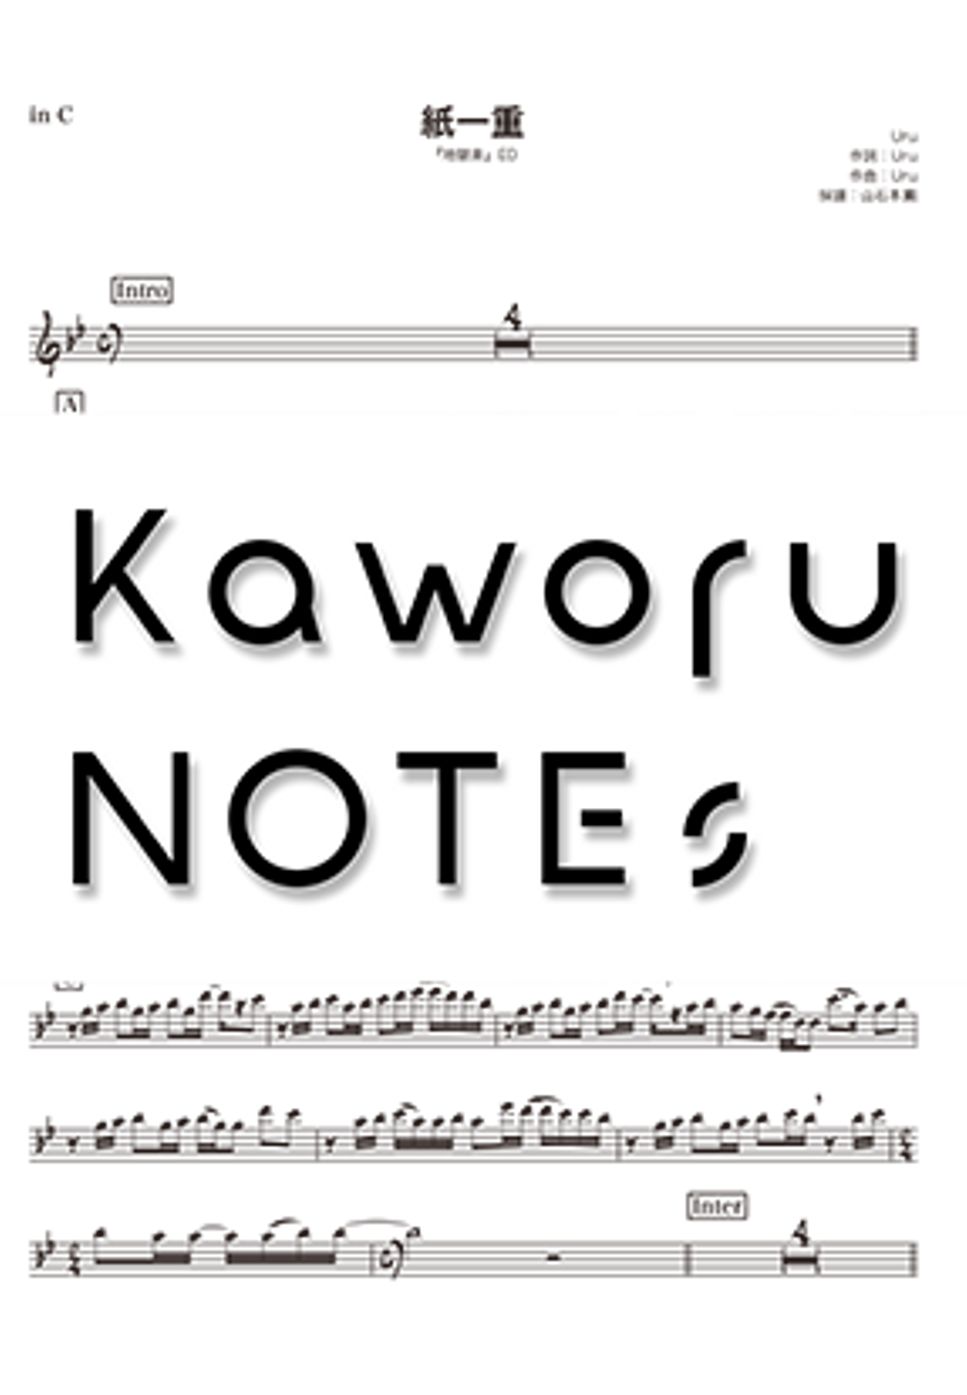 Uru - 紙一重（in E♭『地獄楽』） by Kaworu NOTEs